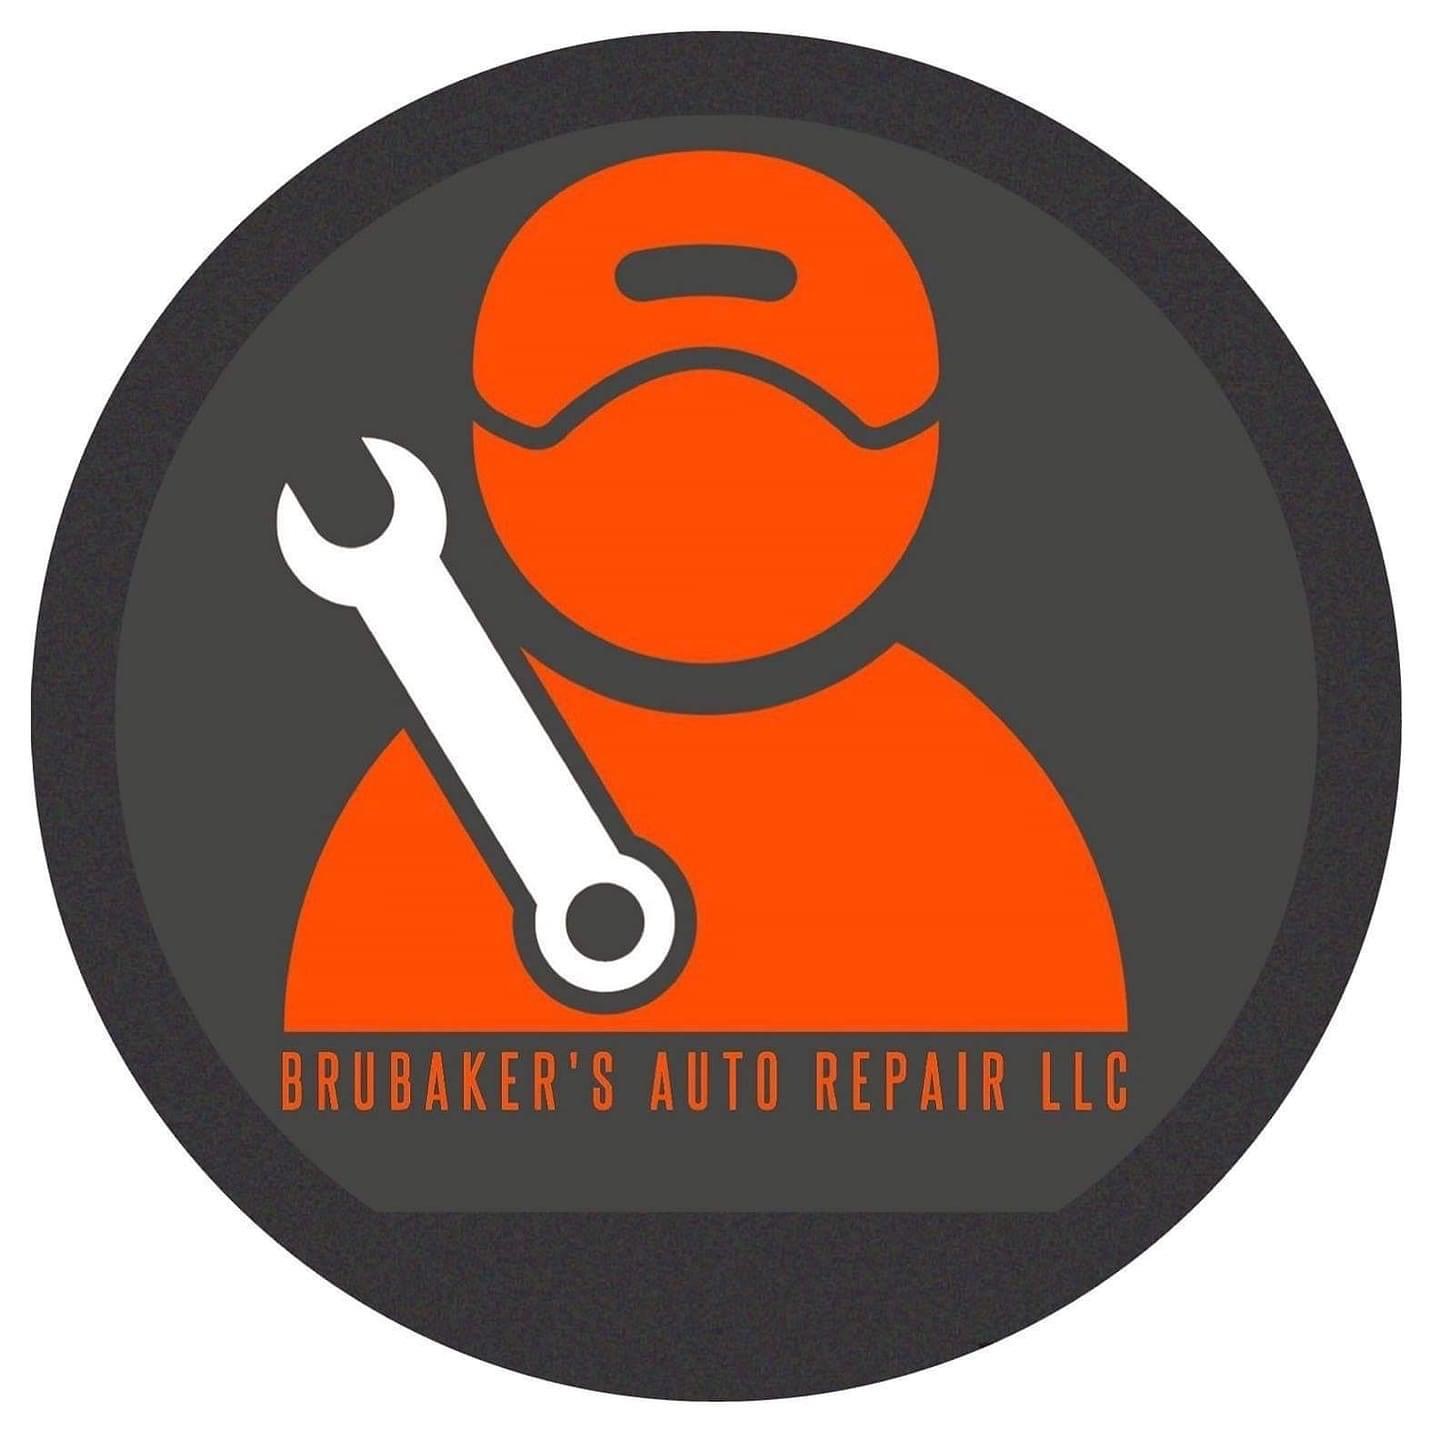 Brubaker's Auto Repair LLC